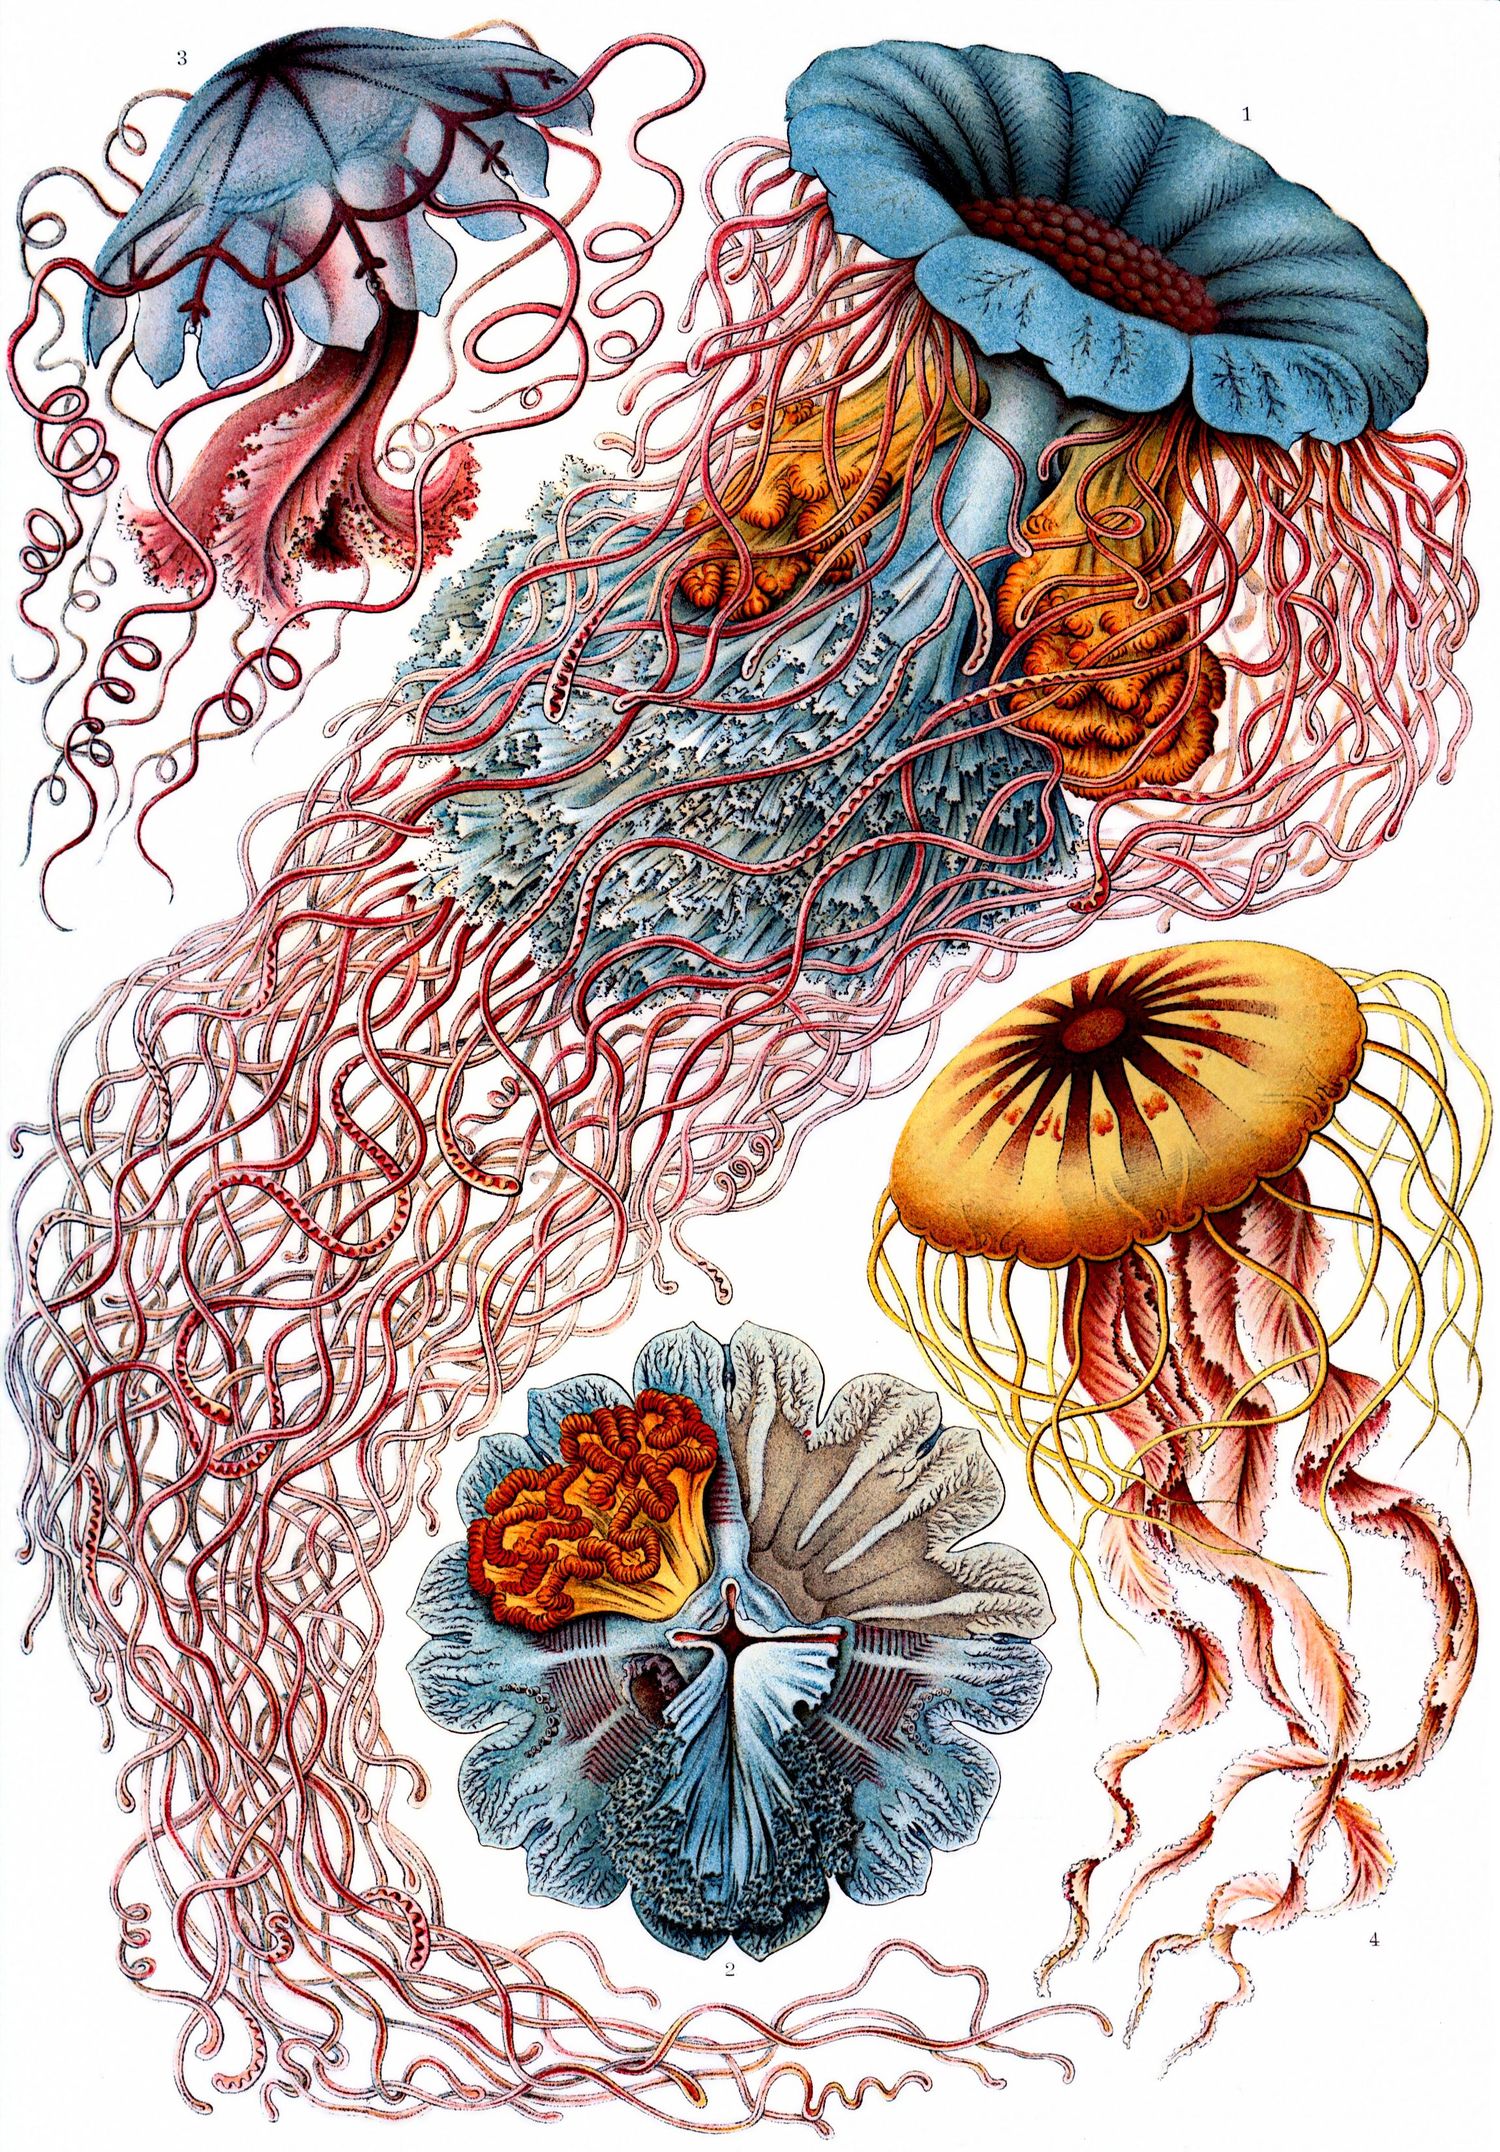 Ernst Haeckel, Kunstformen der Natur, Discomedusae (Quallen), Bildtafel 8, 1904